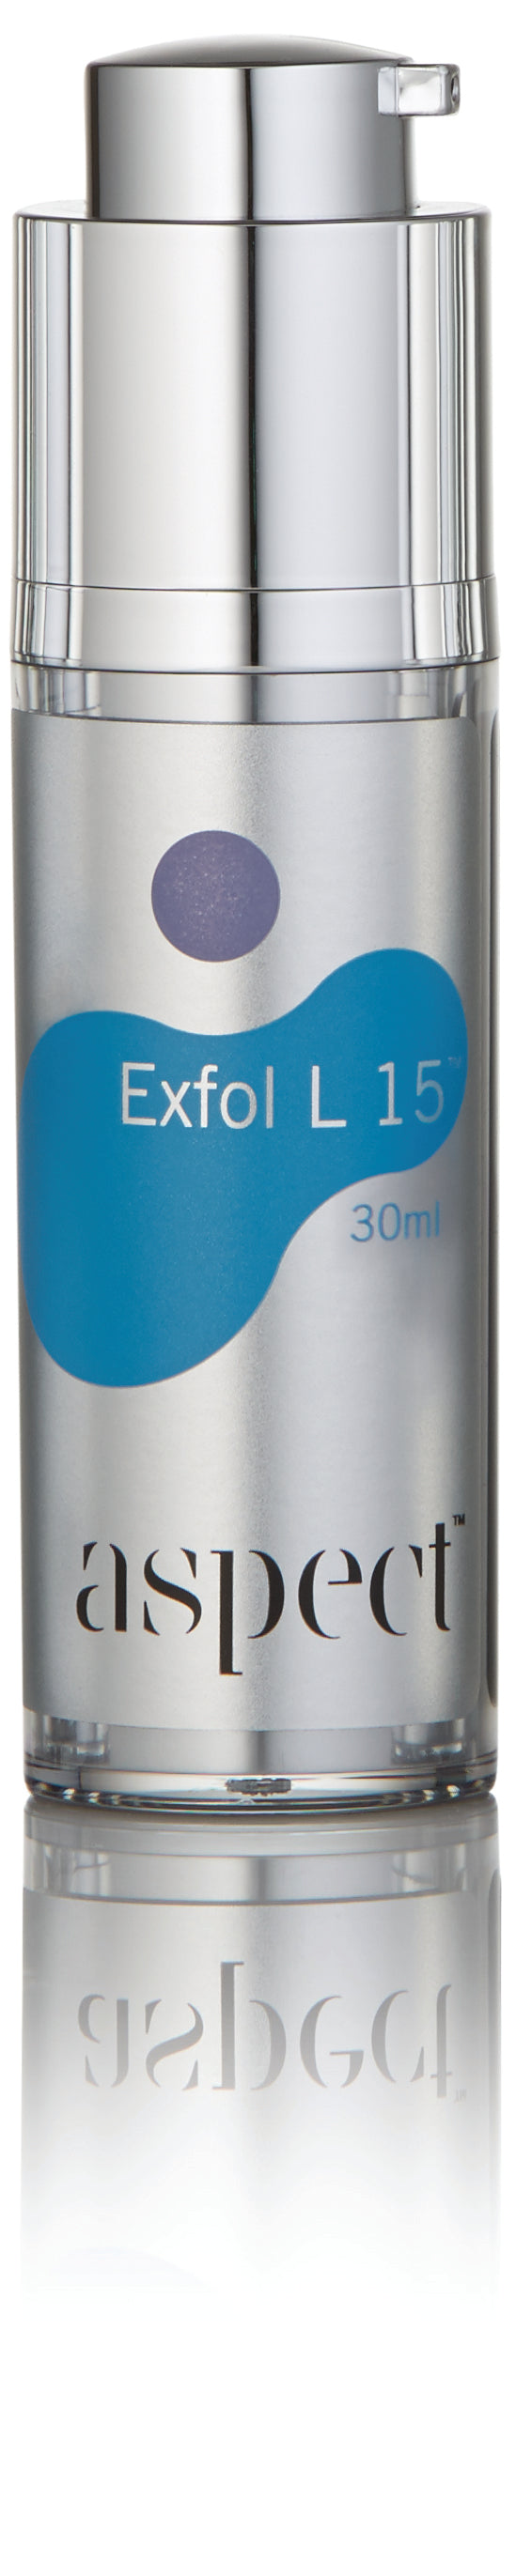 Exfol L 15 30ml